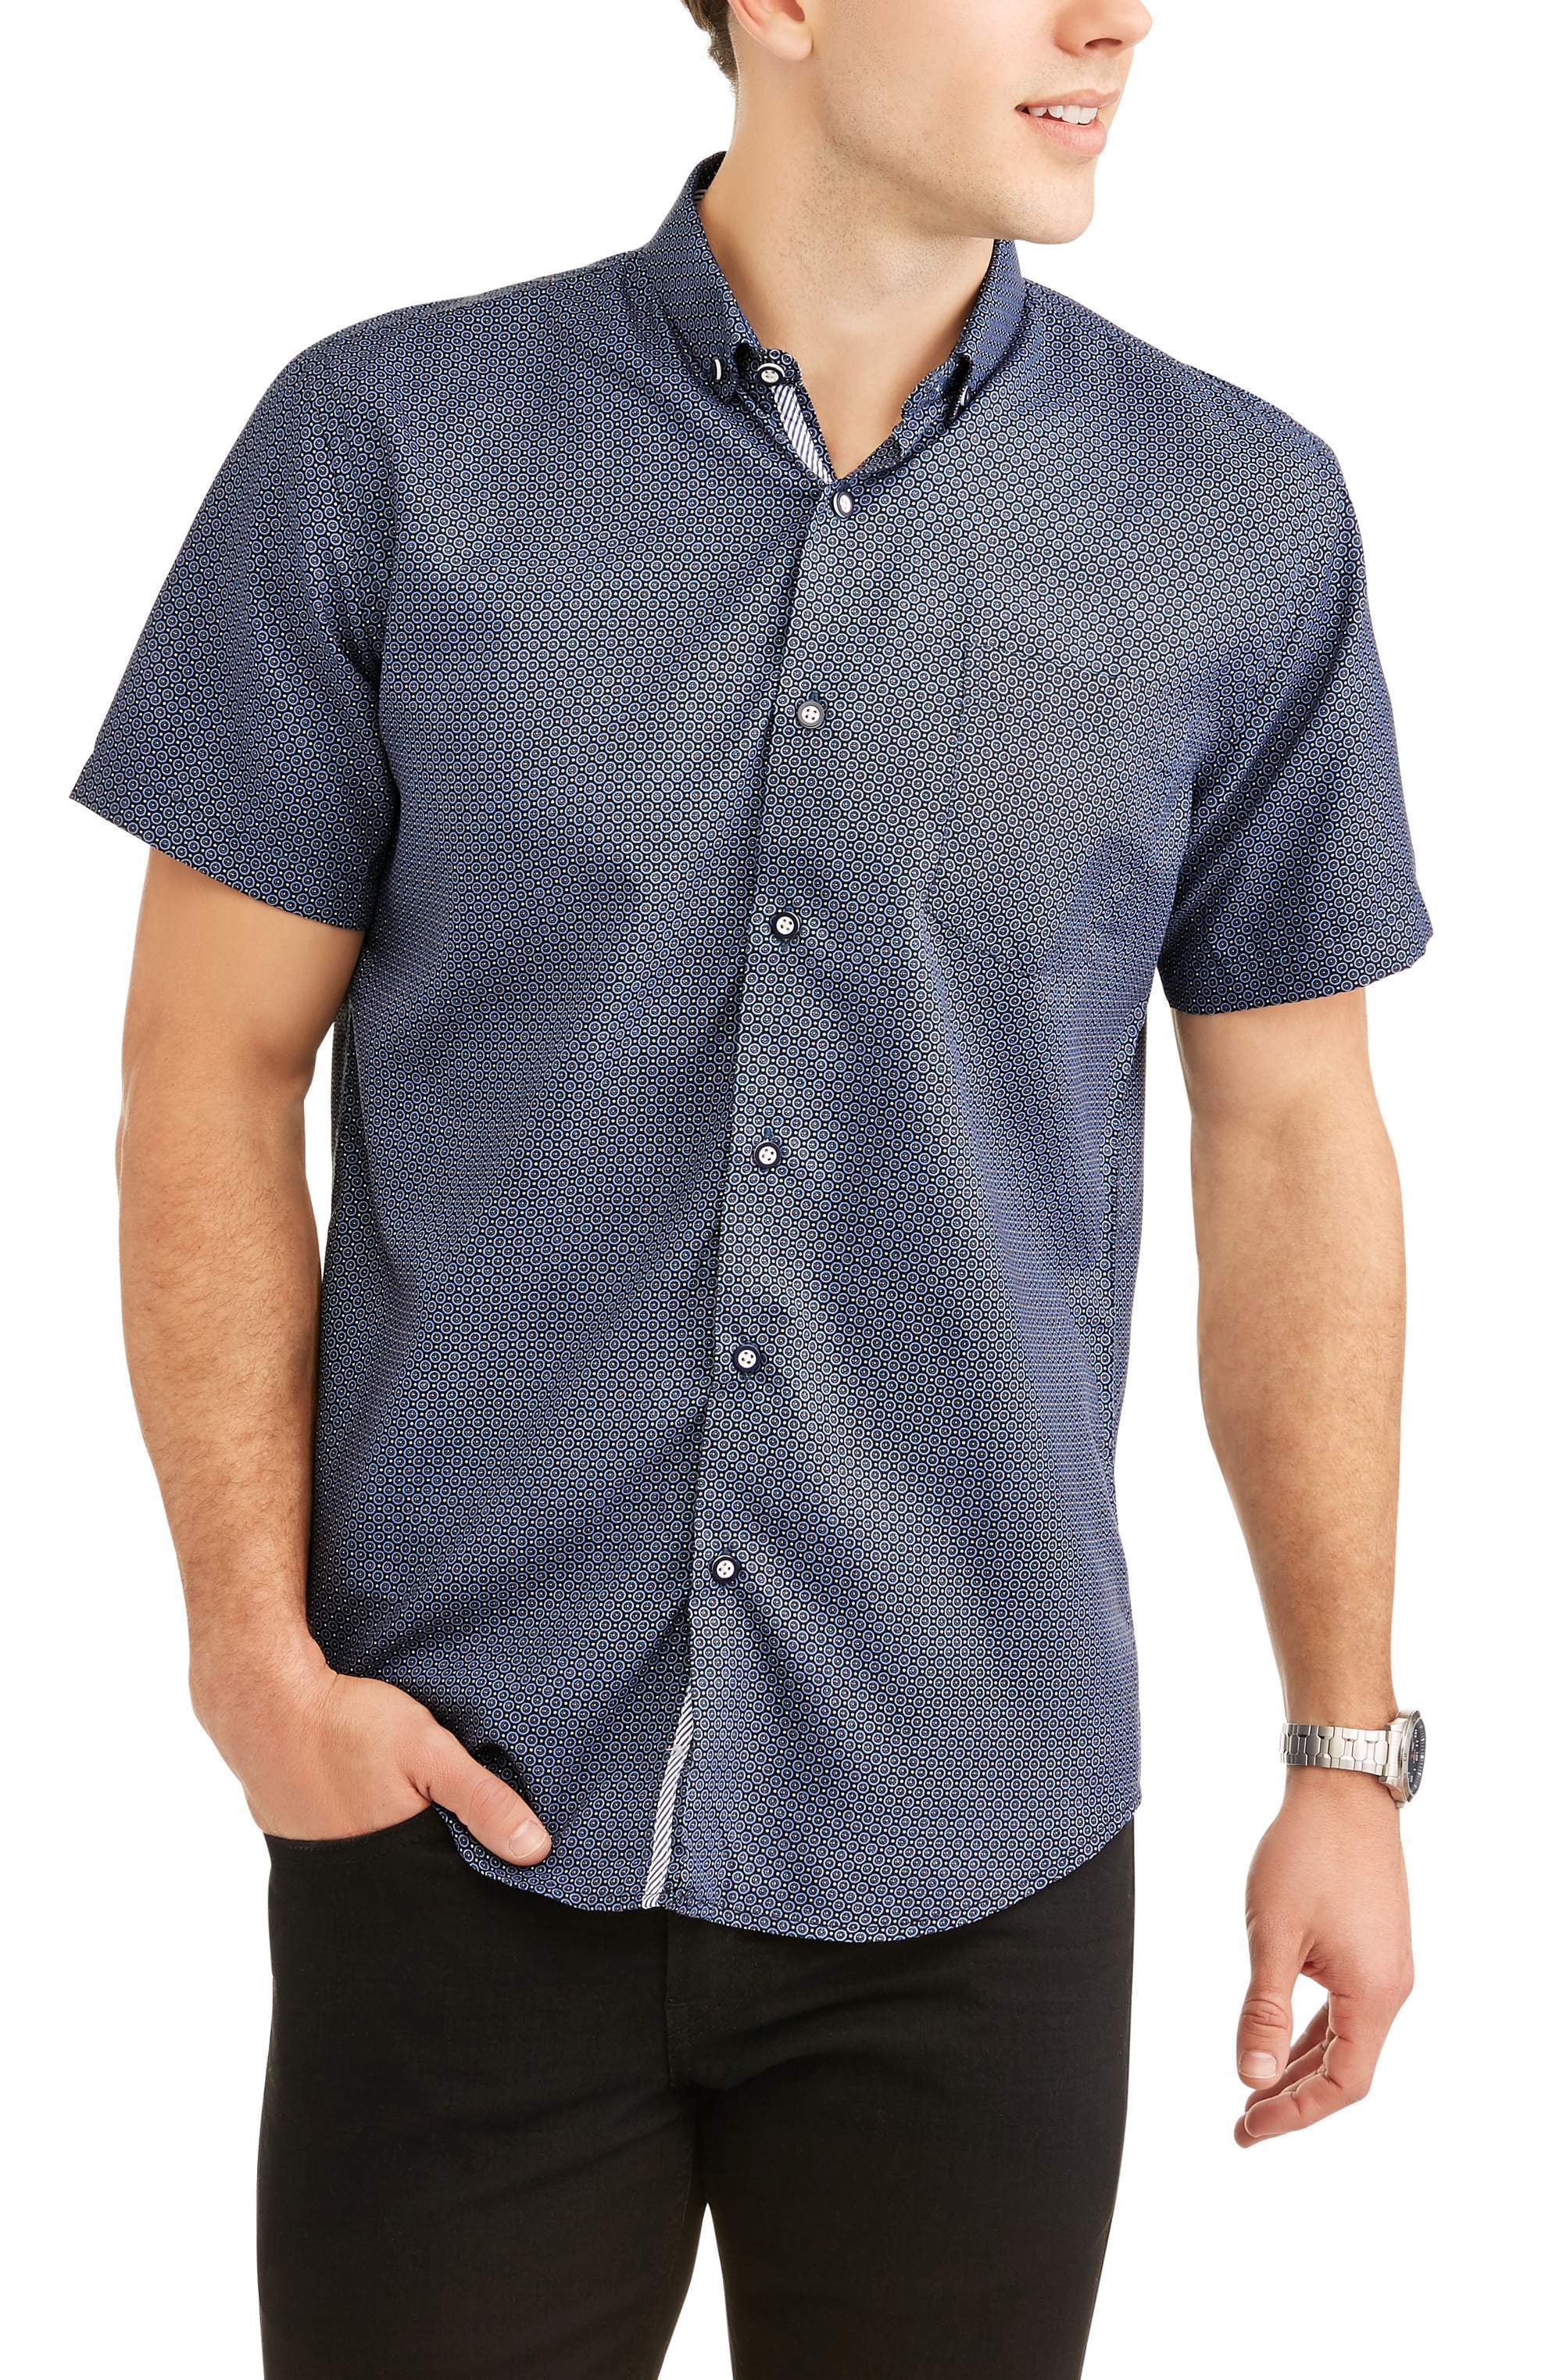 ONLINE - Interaffair Men's Printed Microfiber Woven Short Sleeve Shirt ...